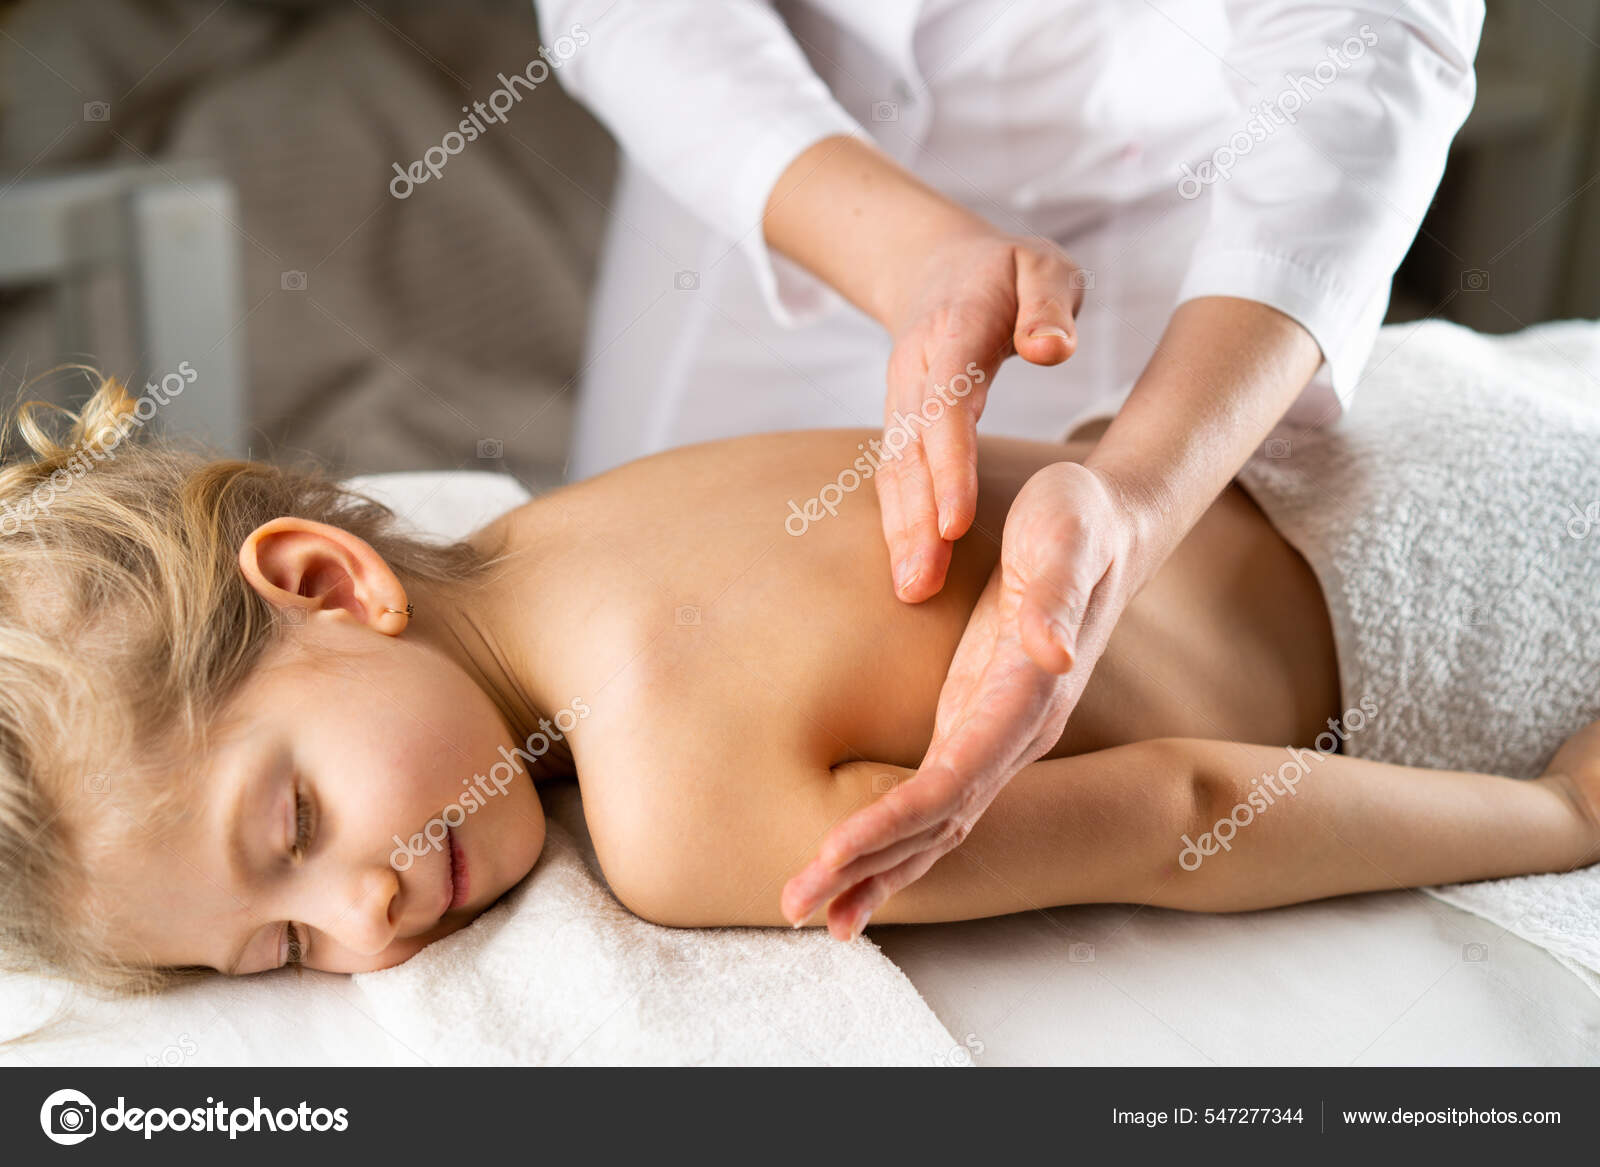 https://st.depositphotos.com/33132266/54727/i/1600/depositphotos_547277344-stock-photo-a-woman-gives-a-massage.jpg